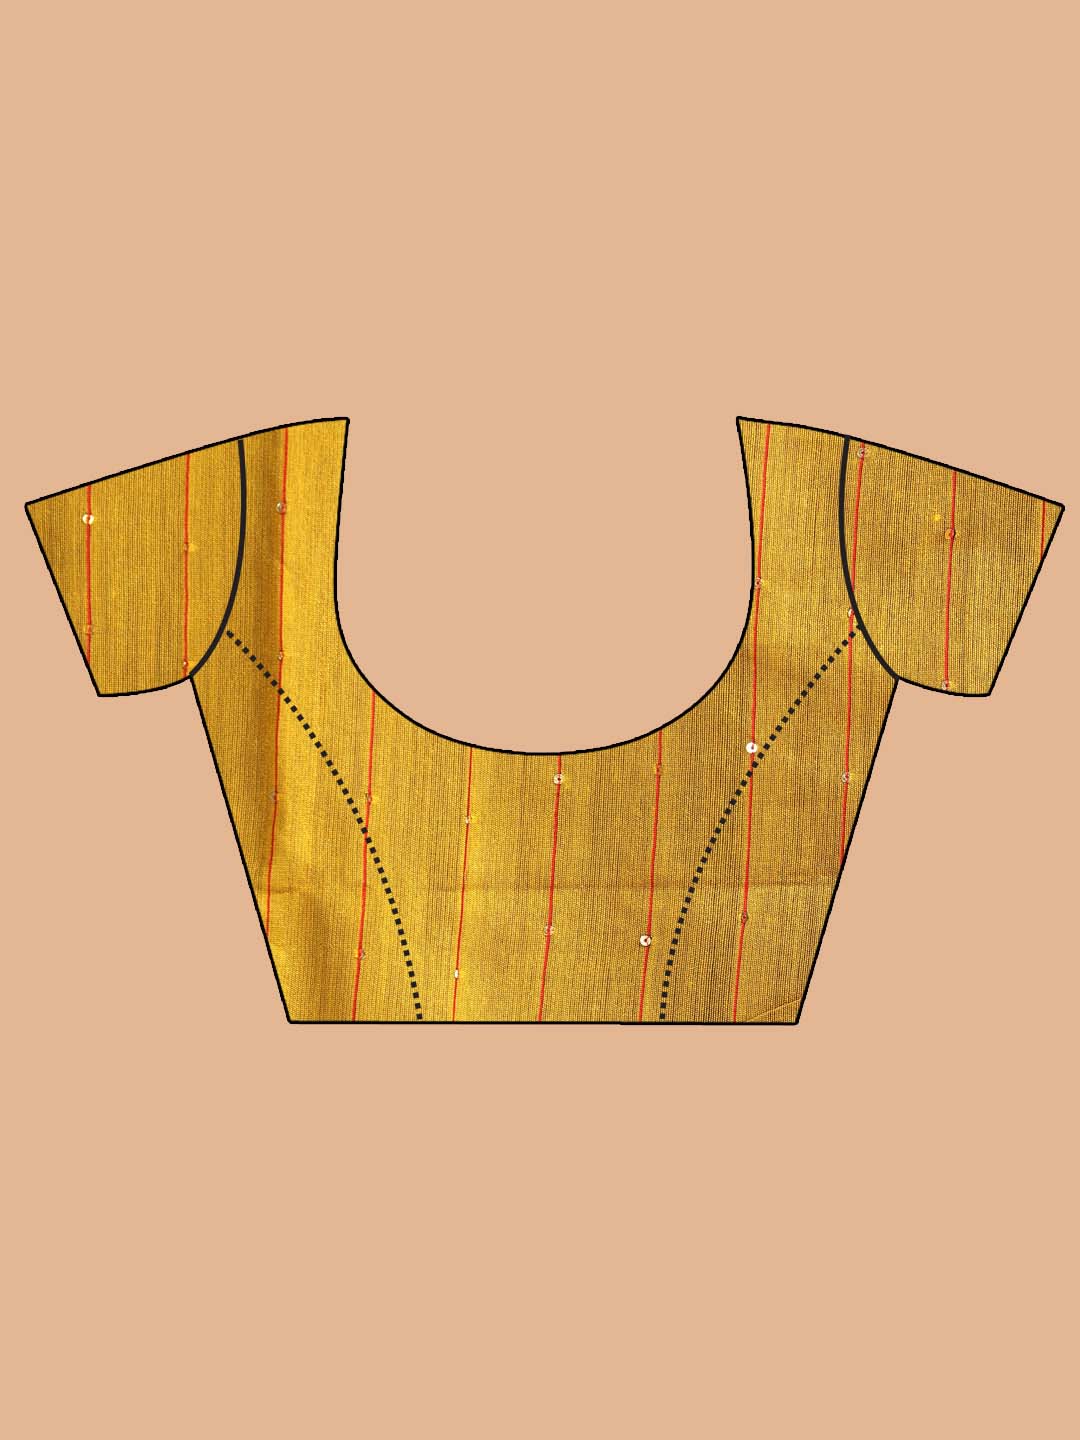 Indethnic Yellow Bengal Handloom Cotton Blend Work Saree - Blouse Piece View